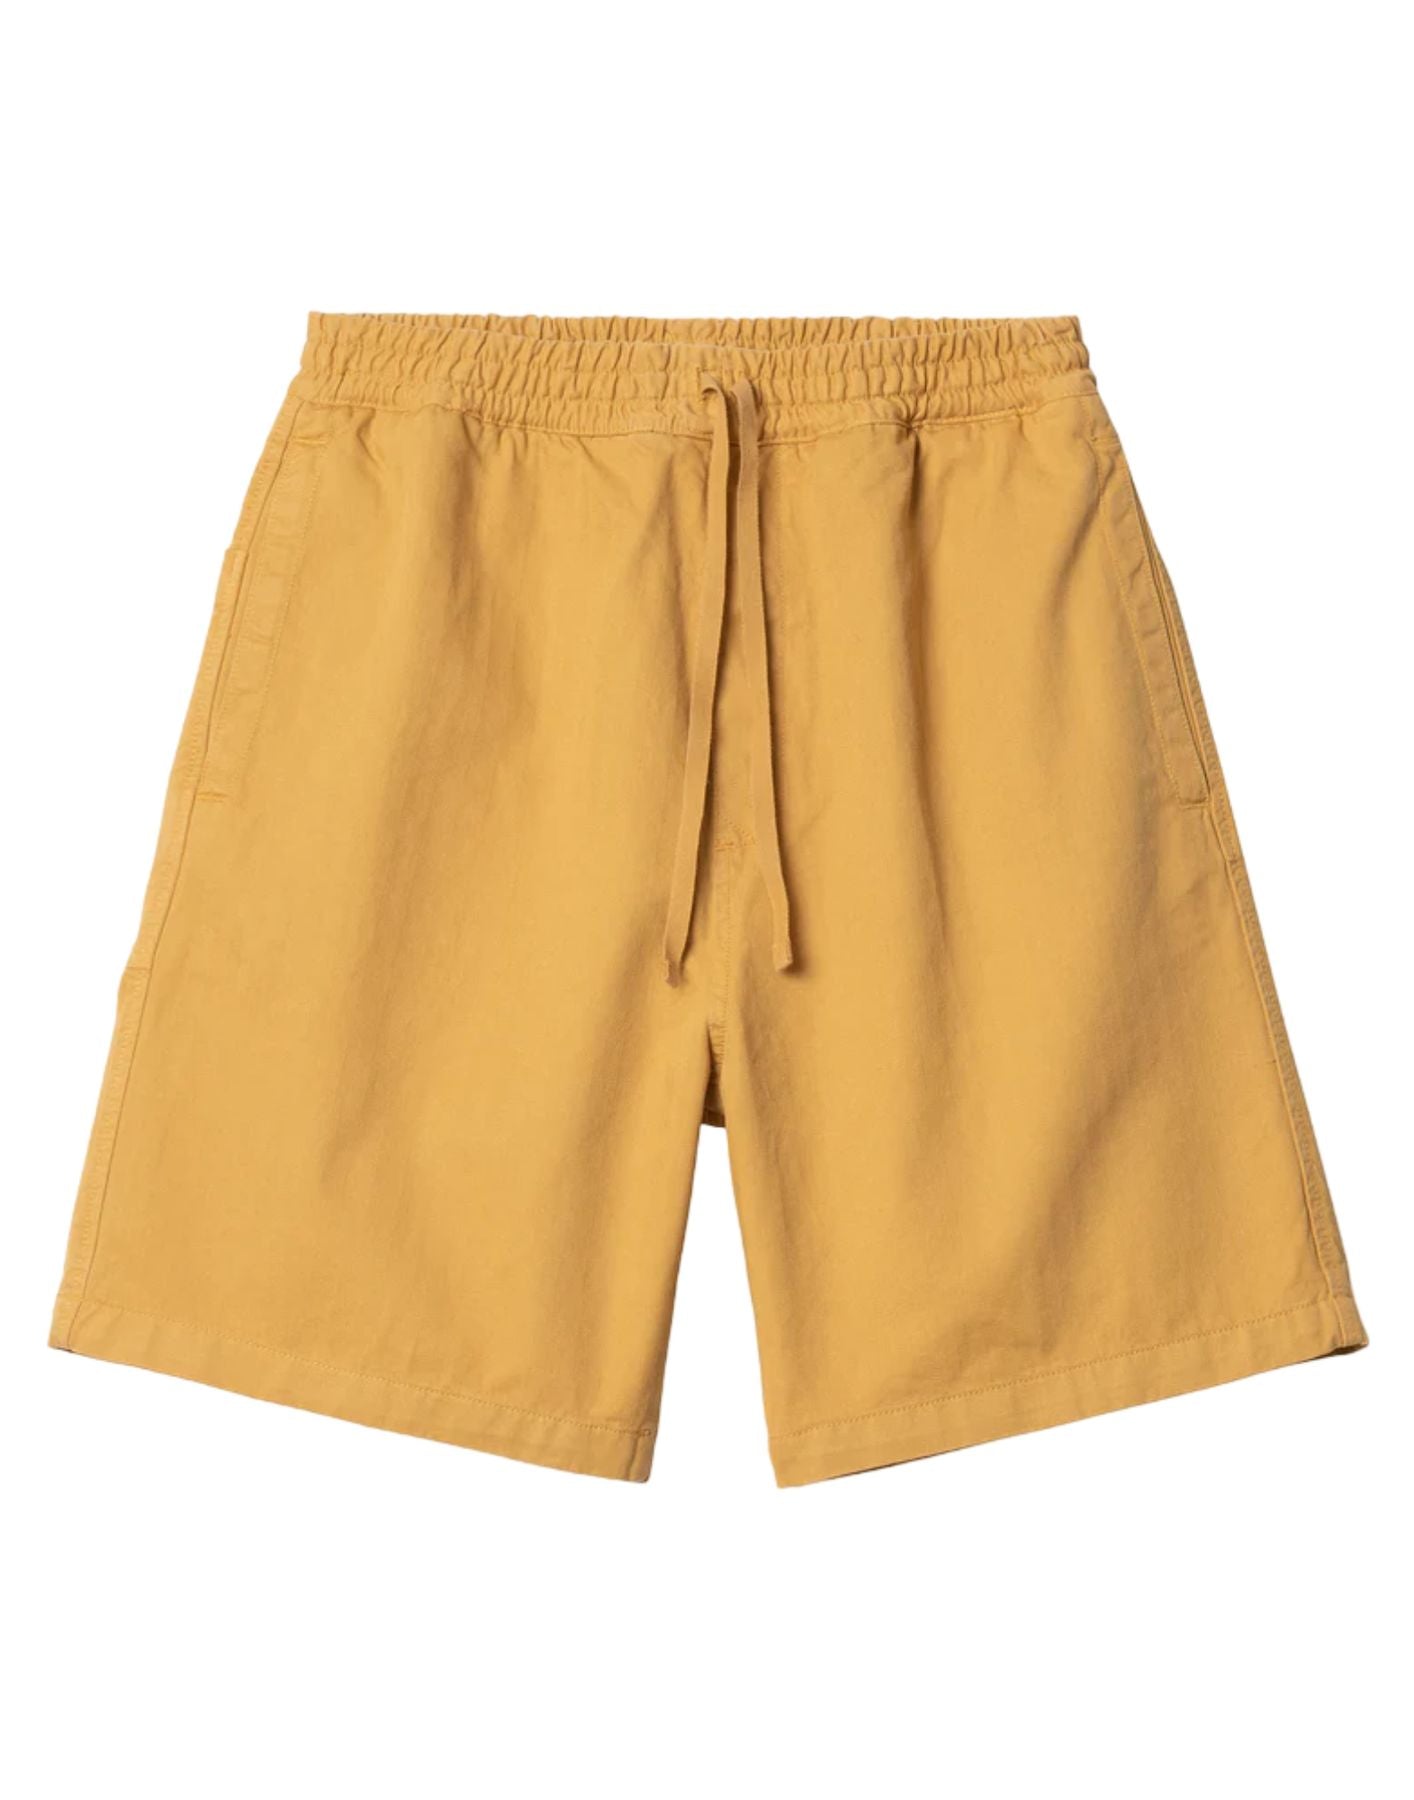 Pantalones cortos para hombre i033133 15 CARHARTT WIP